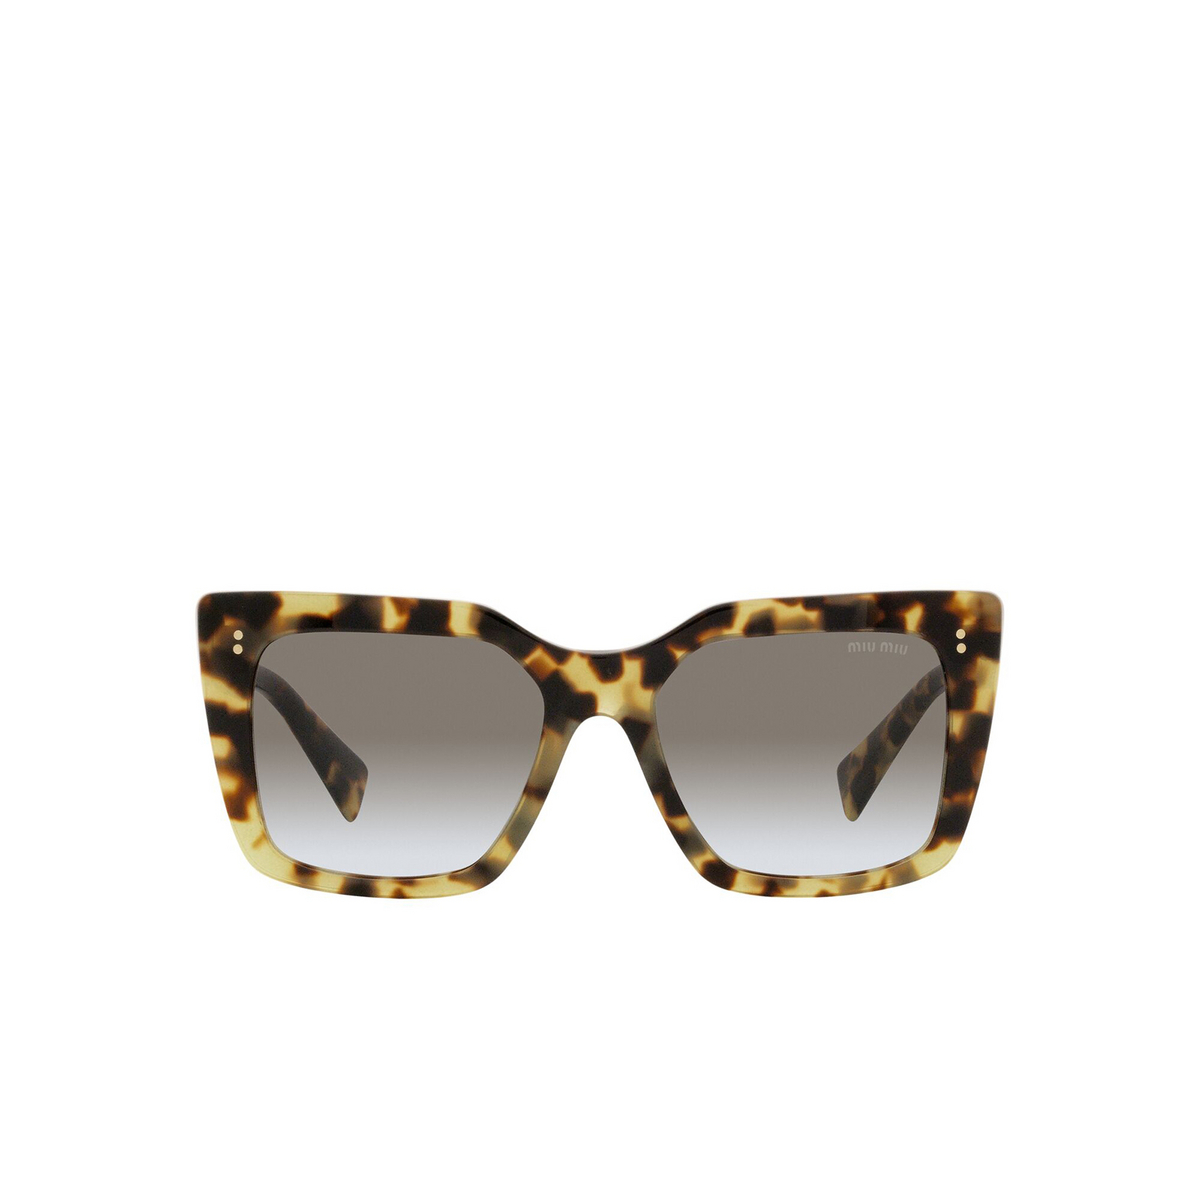 Miu Miu® Square Sunglasses: MU 02WS color Light Havana 7S00A7 - front view.